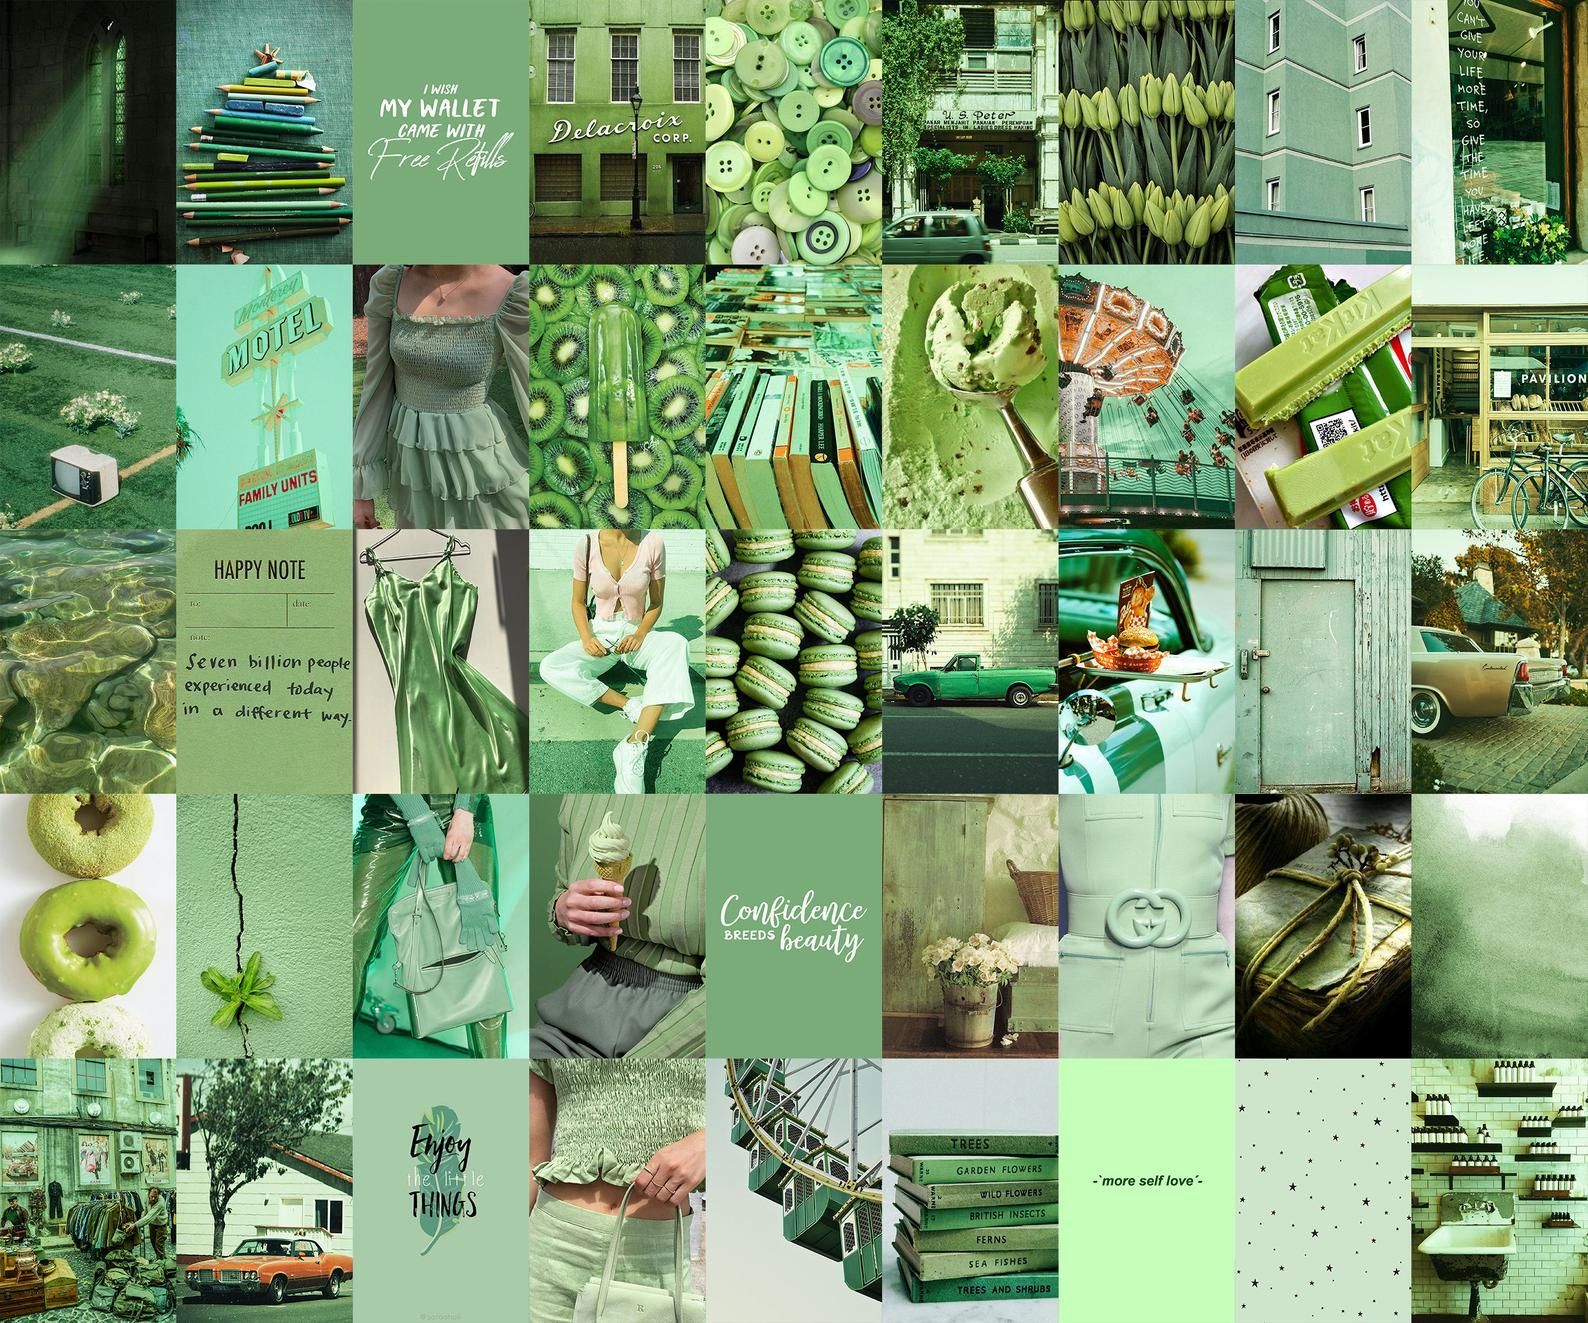 Aesthetic iPad Green Wallpapers - Wallpaper Cave